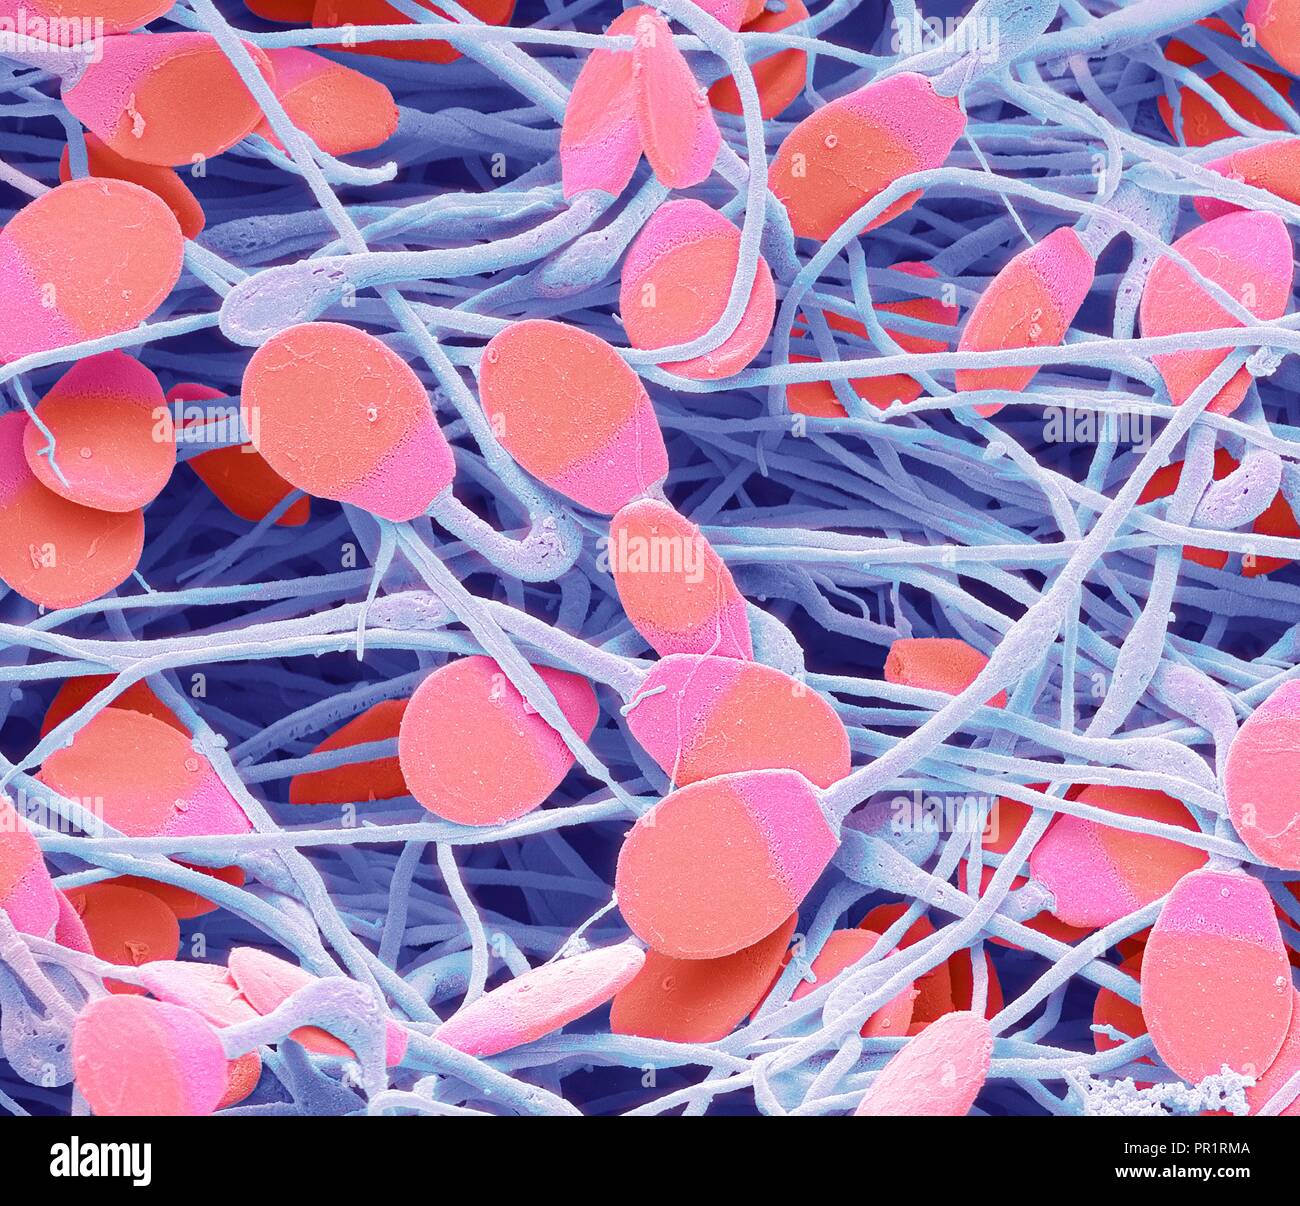 Sperm cells microscope -Fotos und -Bildmaterial in hoher Auflösung – Alamy